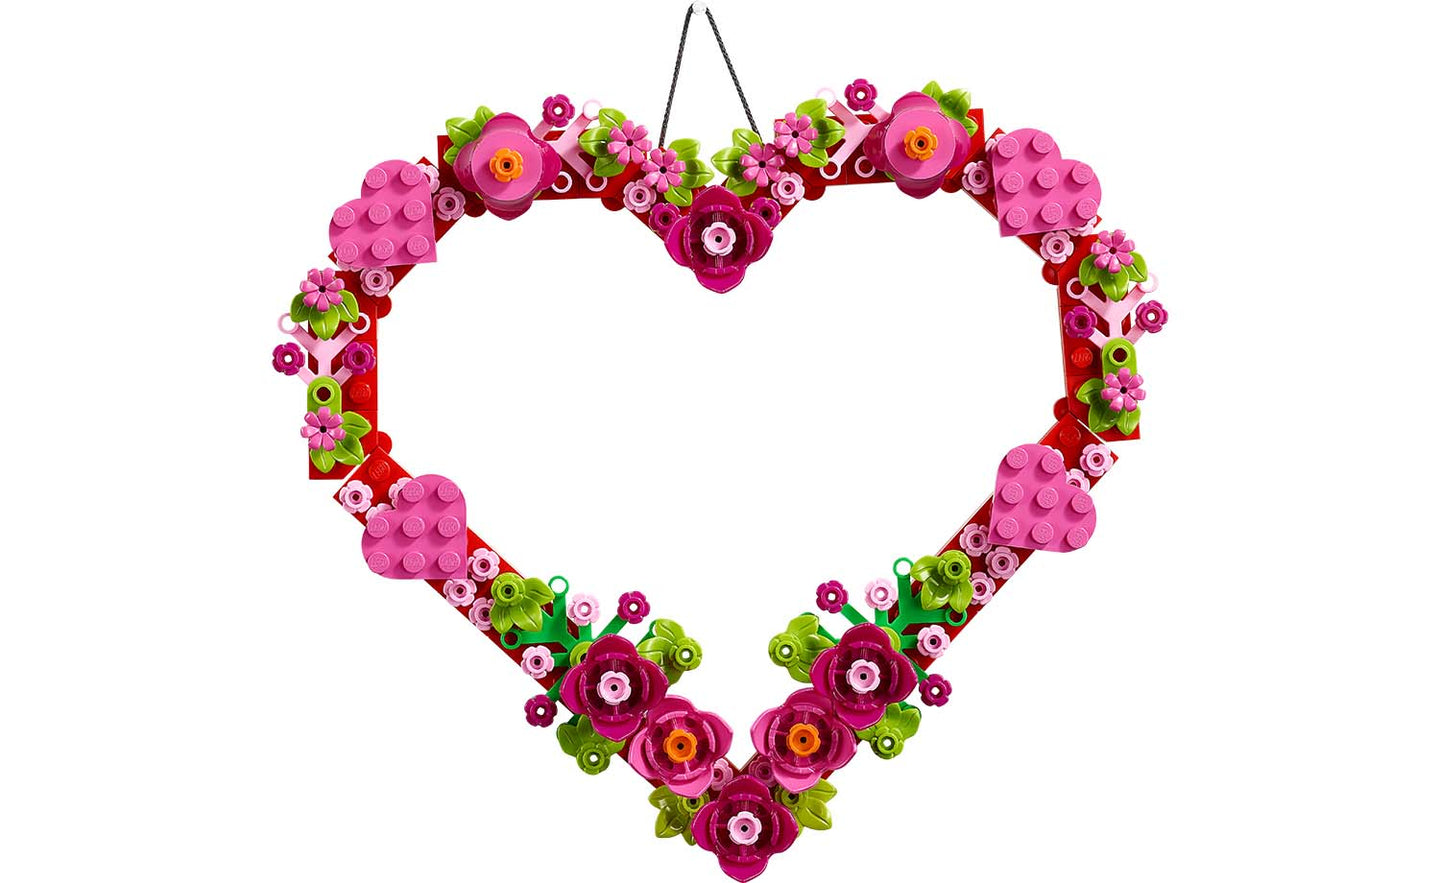 40638 | LEGO® Iconic Heart Ornament